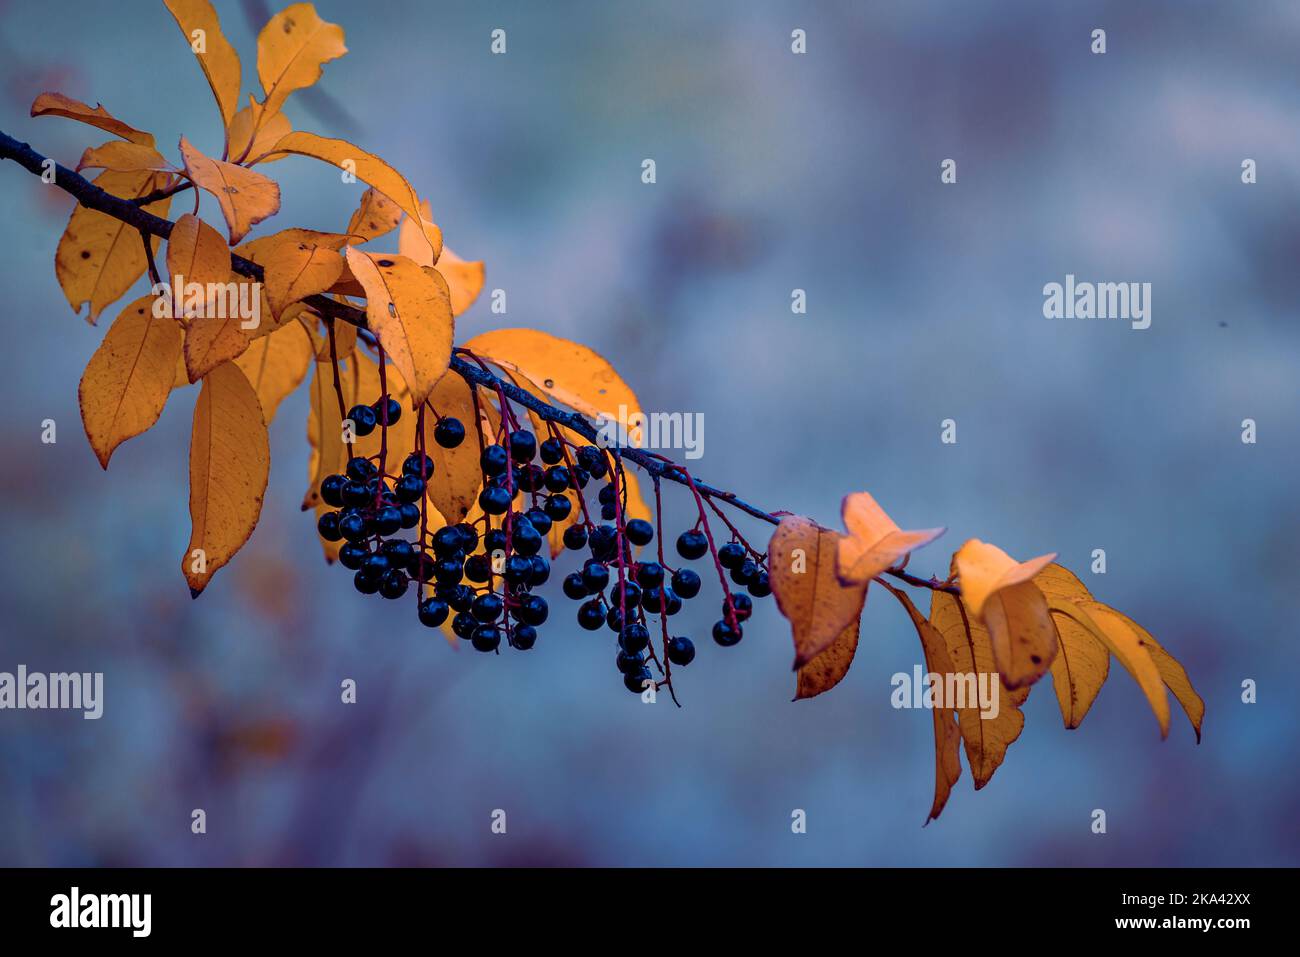 European Bird Cherry (Prunus padus) and Bracken (Pteridium aquilinum) with hoar-frost, autumnal colouring Autumn landscape  forest Stock Photo